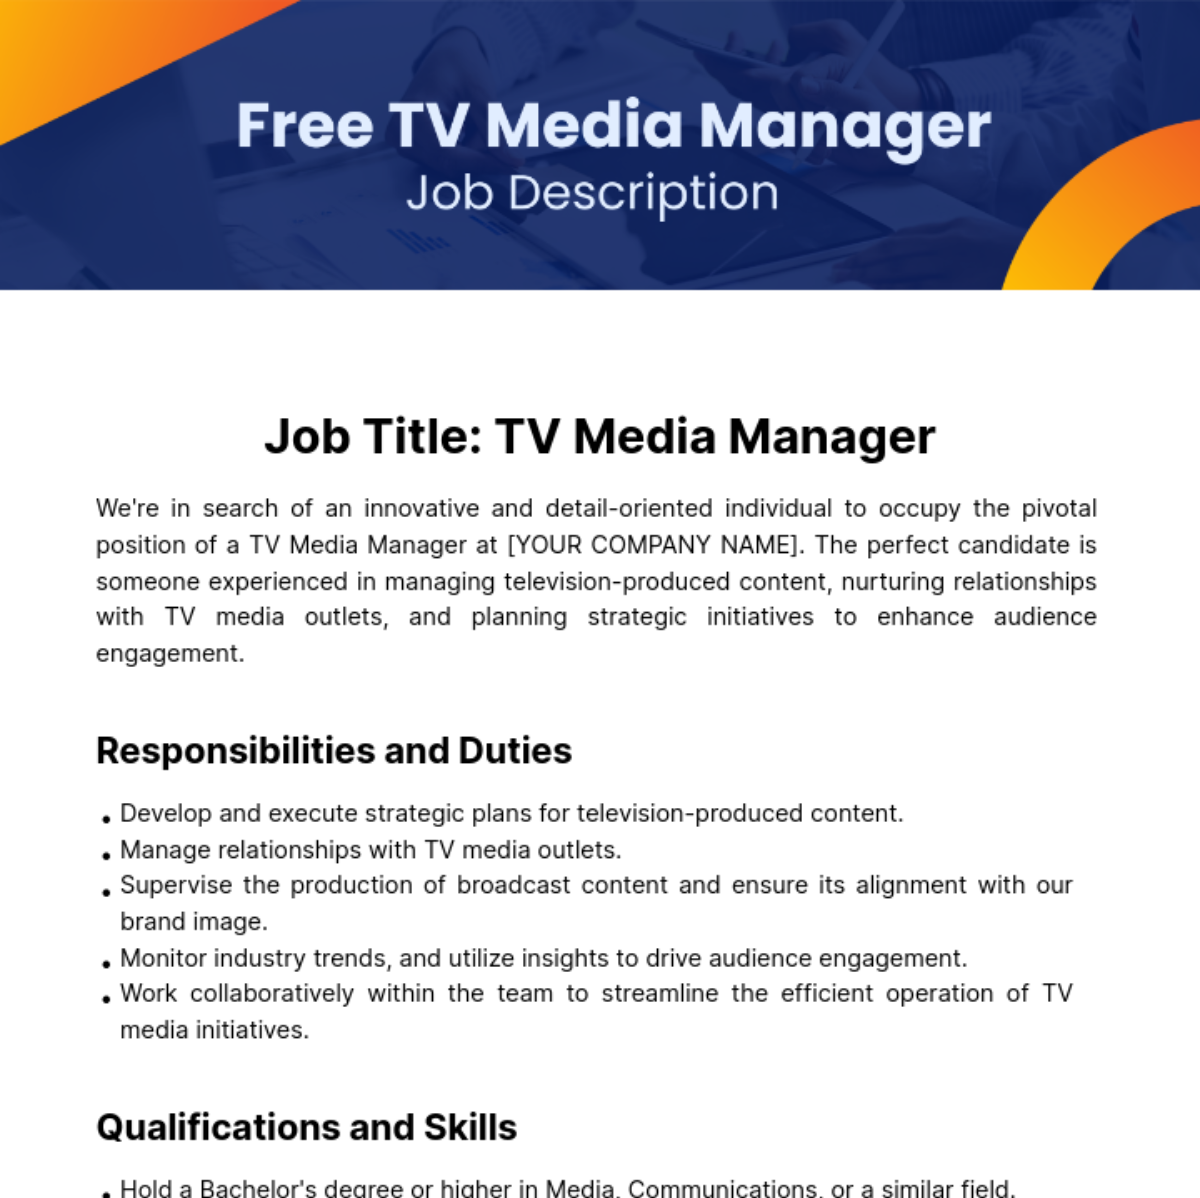 Free TV Media Manager Job Description Template